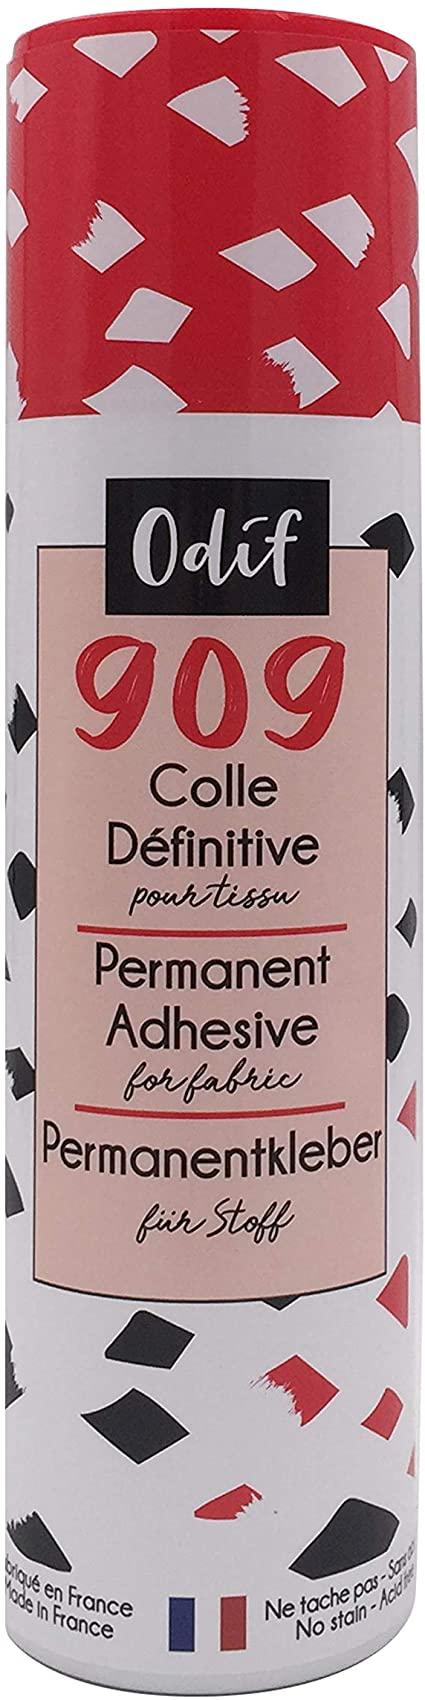 Spray Cola Permanente para Tela - 909